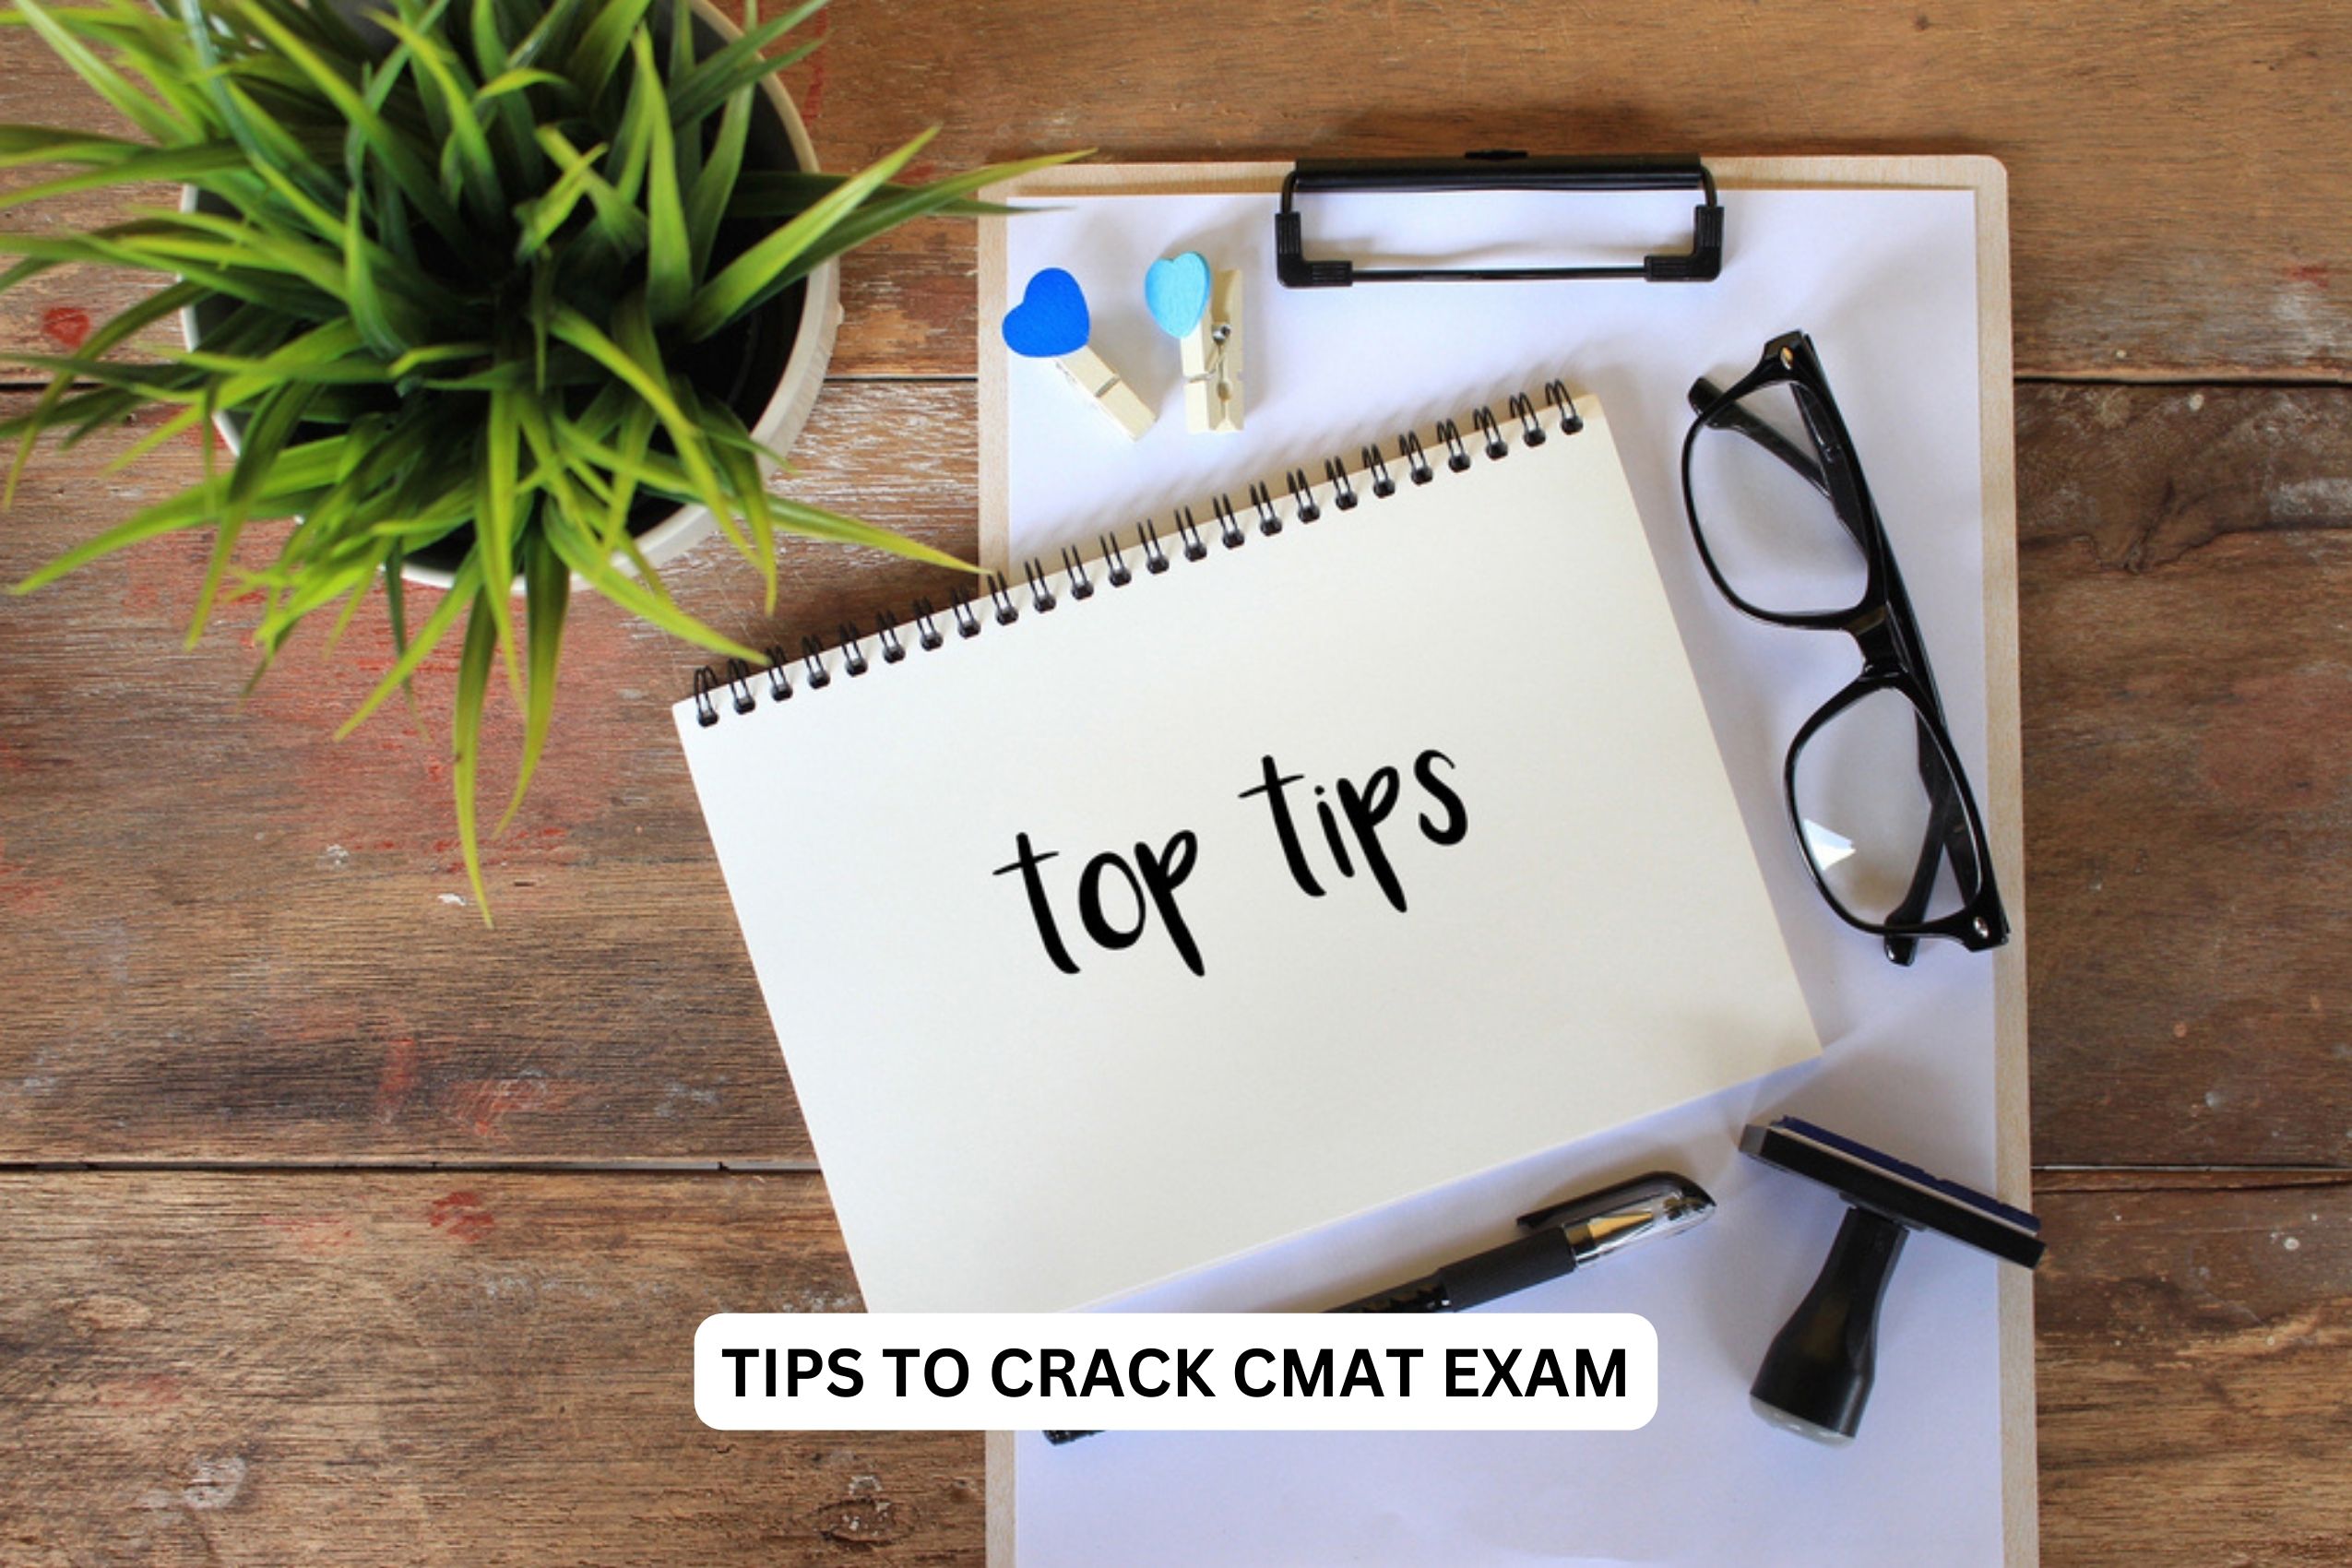 Tips to Crack CMAT Exam